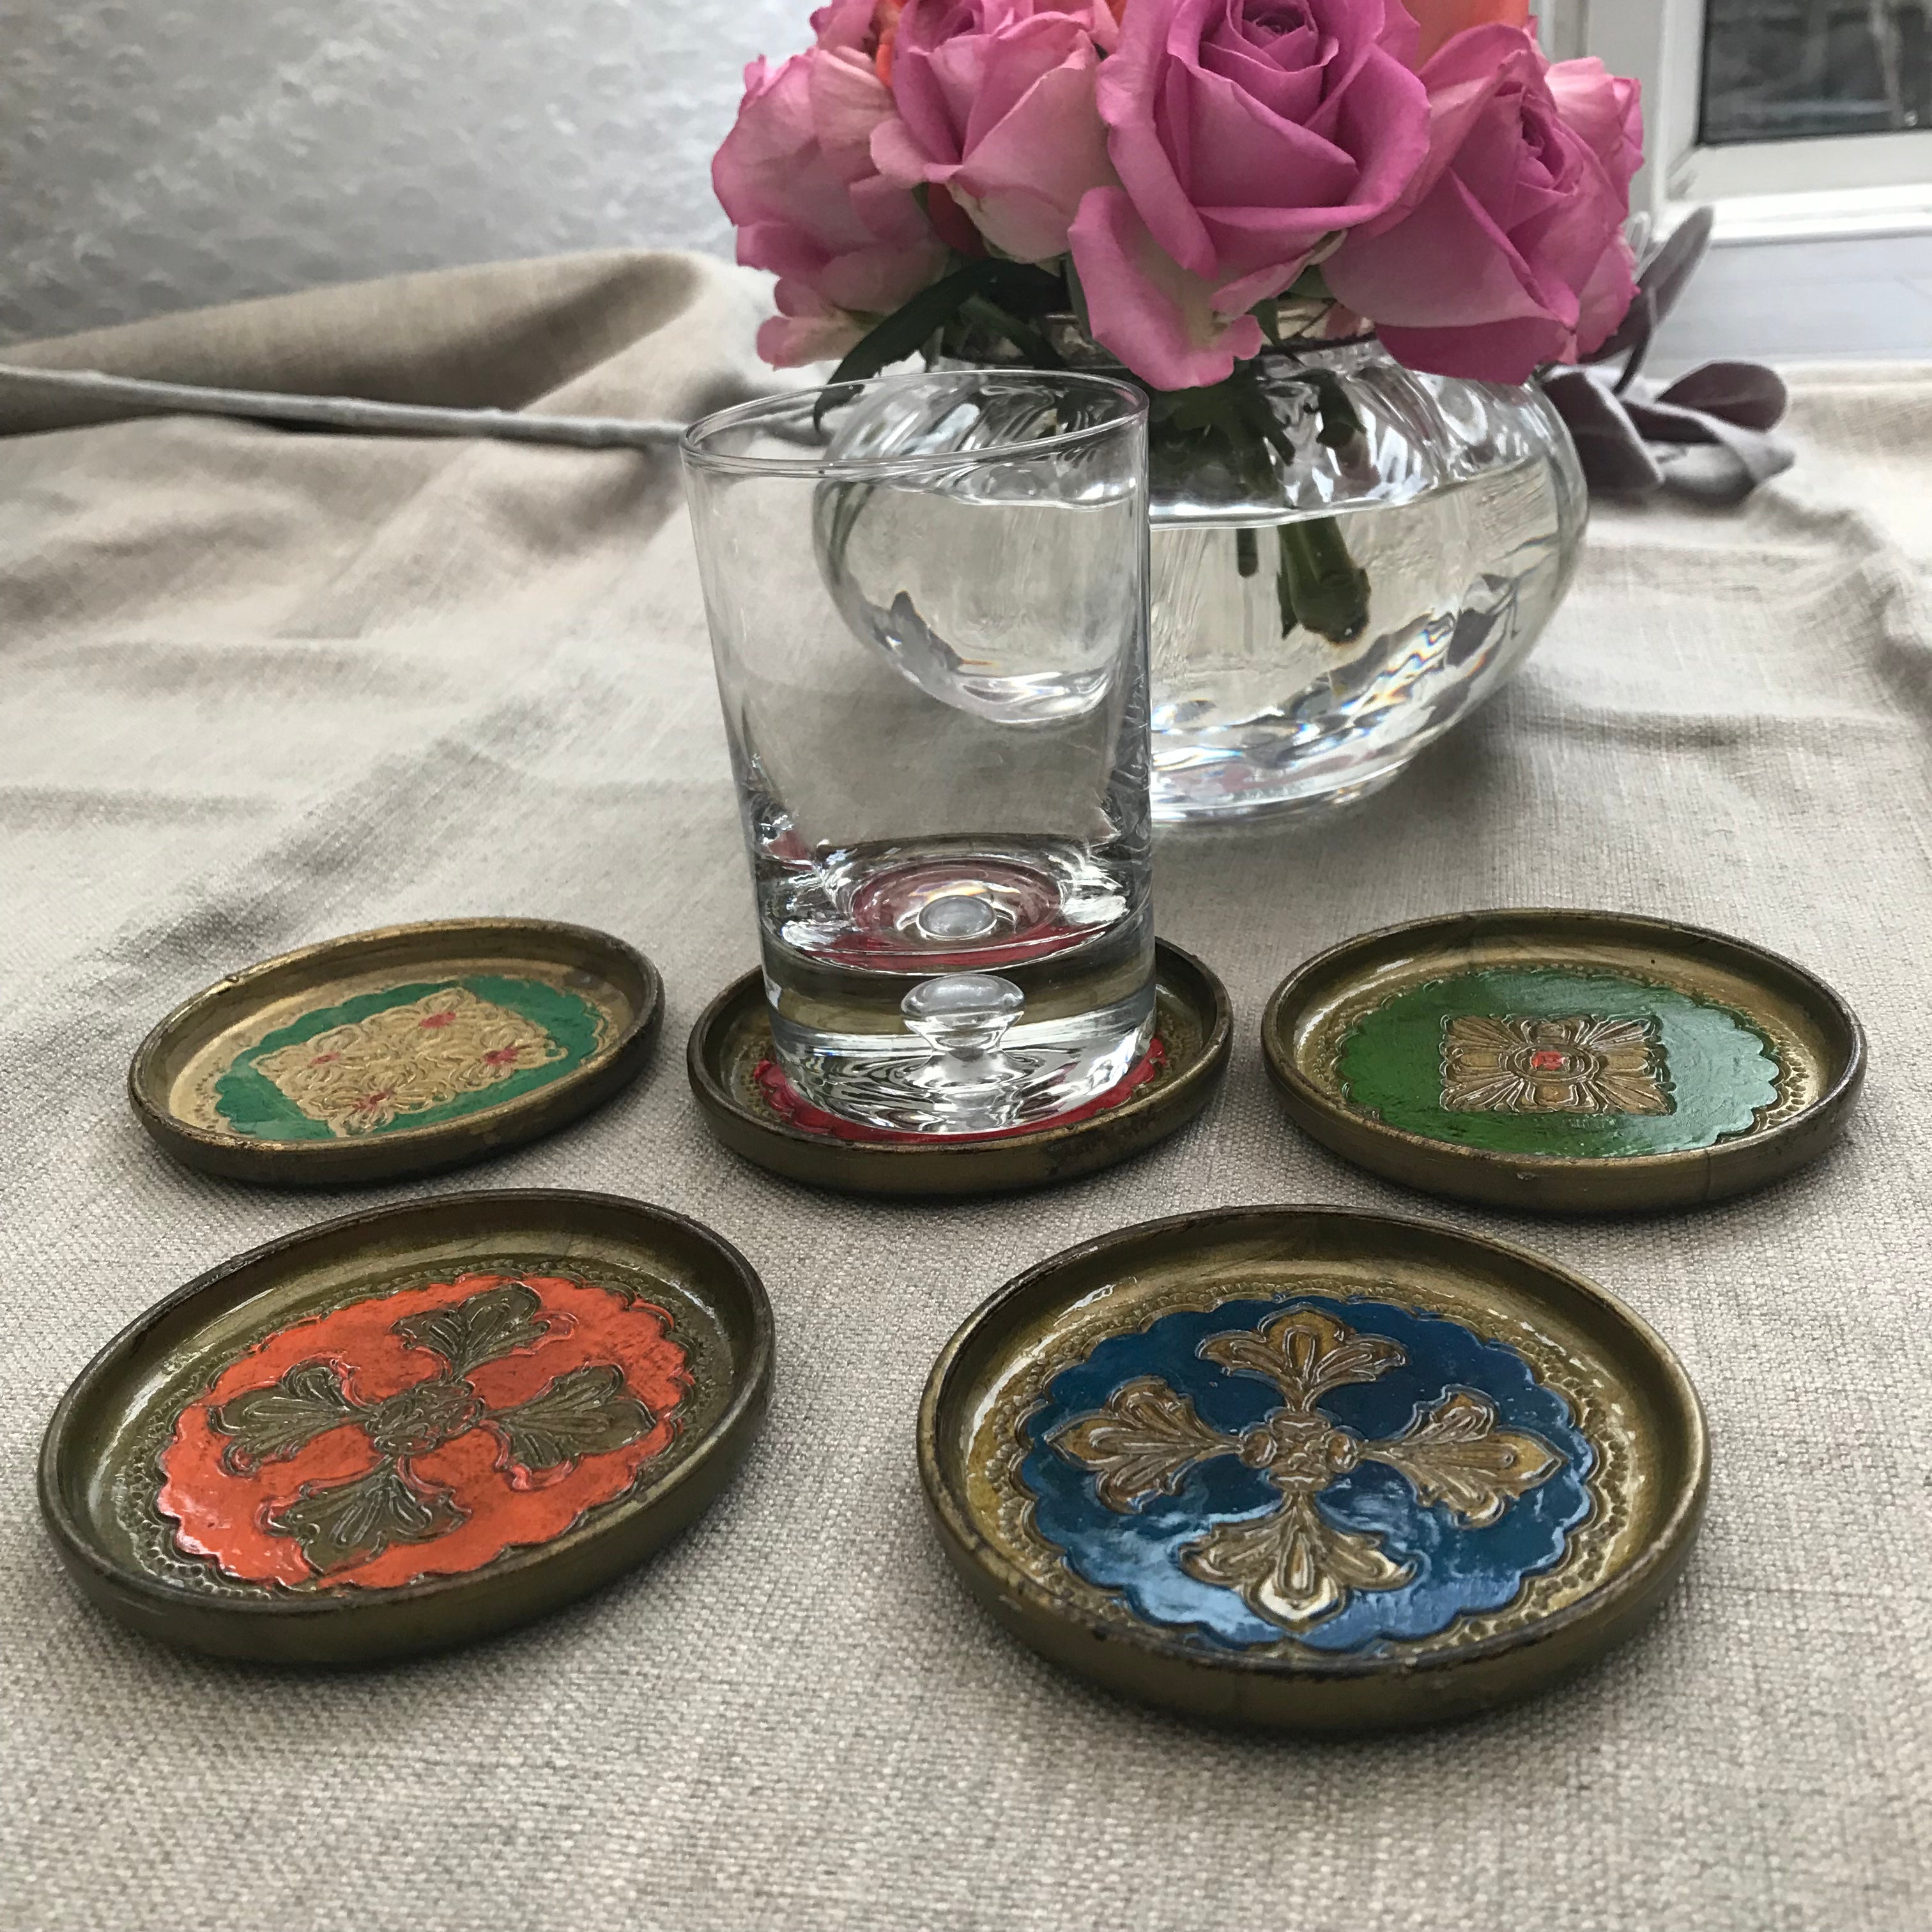 Set of Five Vintage Italian Florentine Coasters - Colour Mix